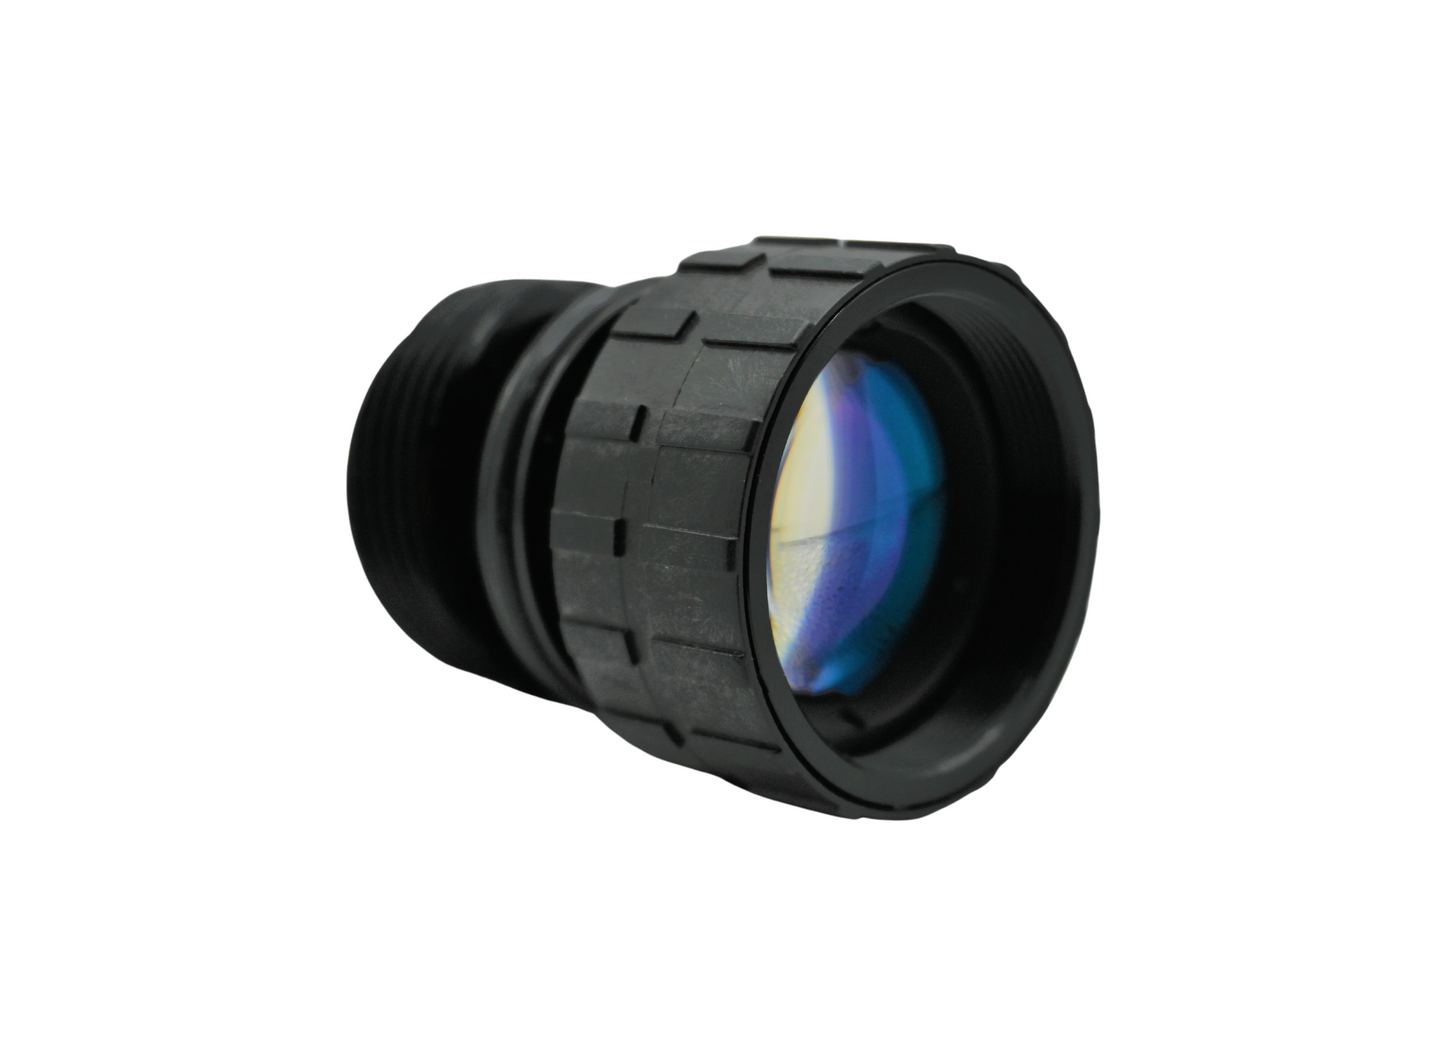 Qioptiq PVS-14 Objective Lens (Milspec)